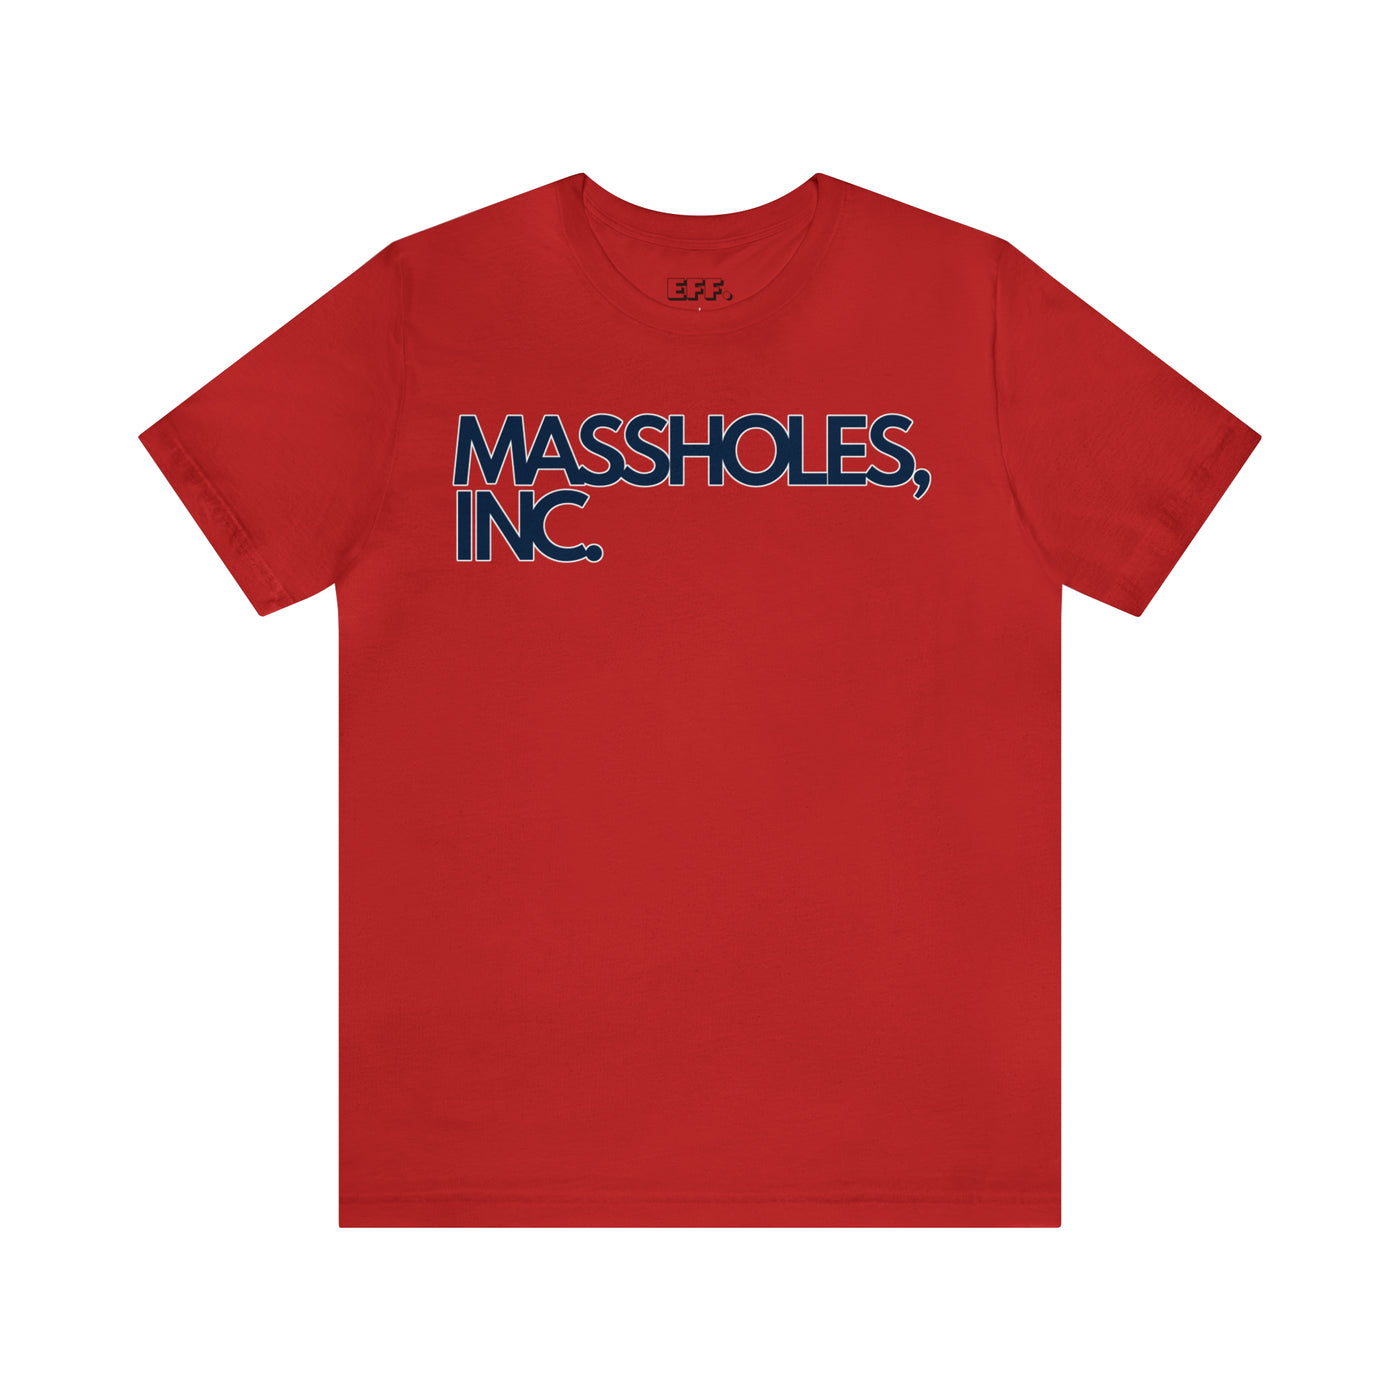 Massholes, Inc.